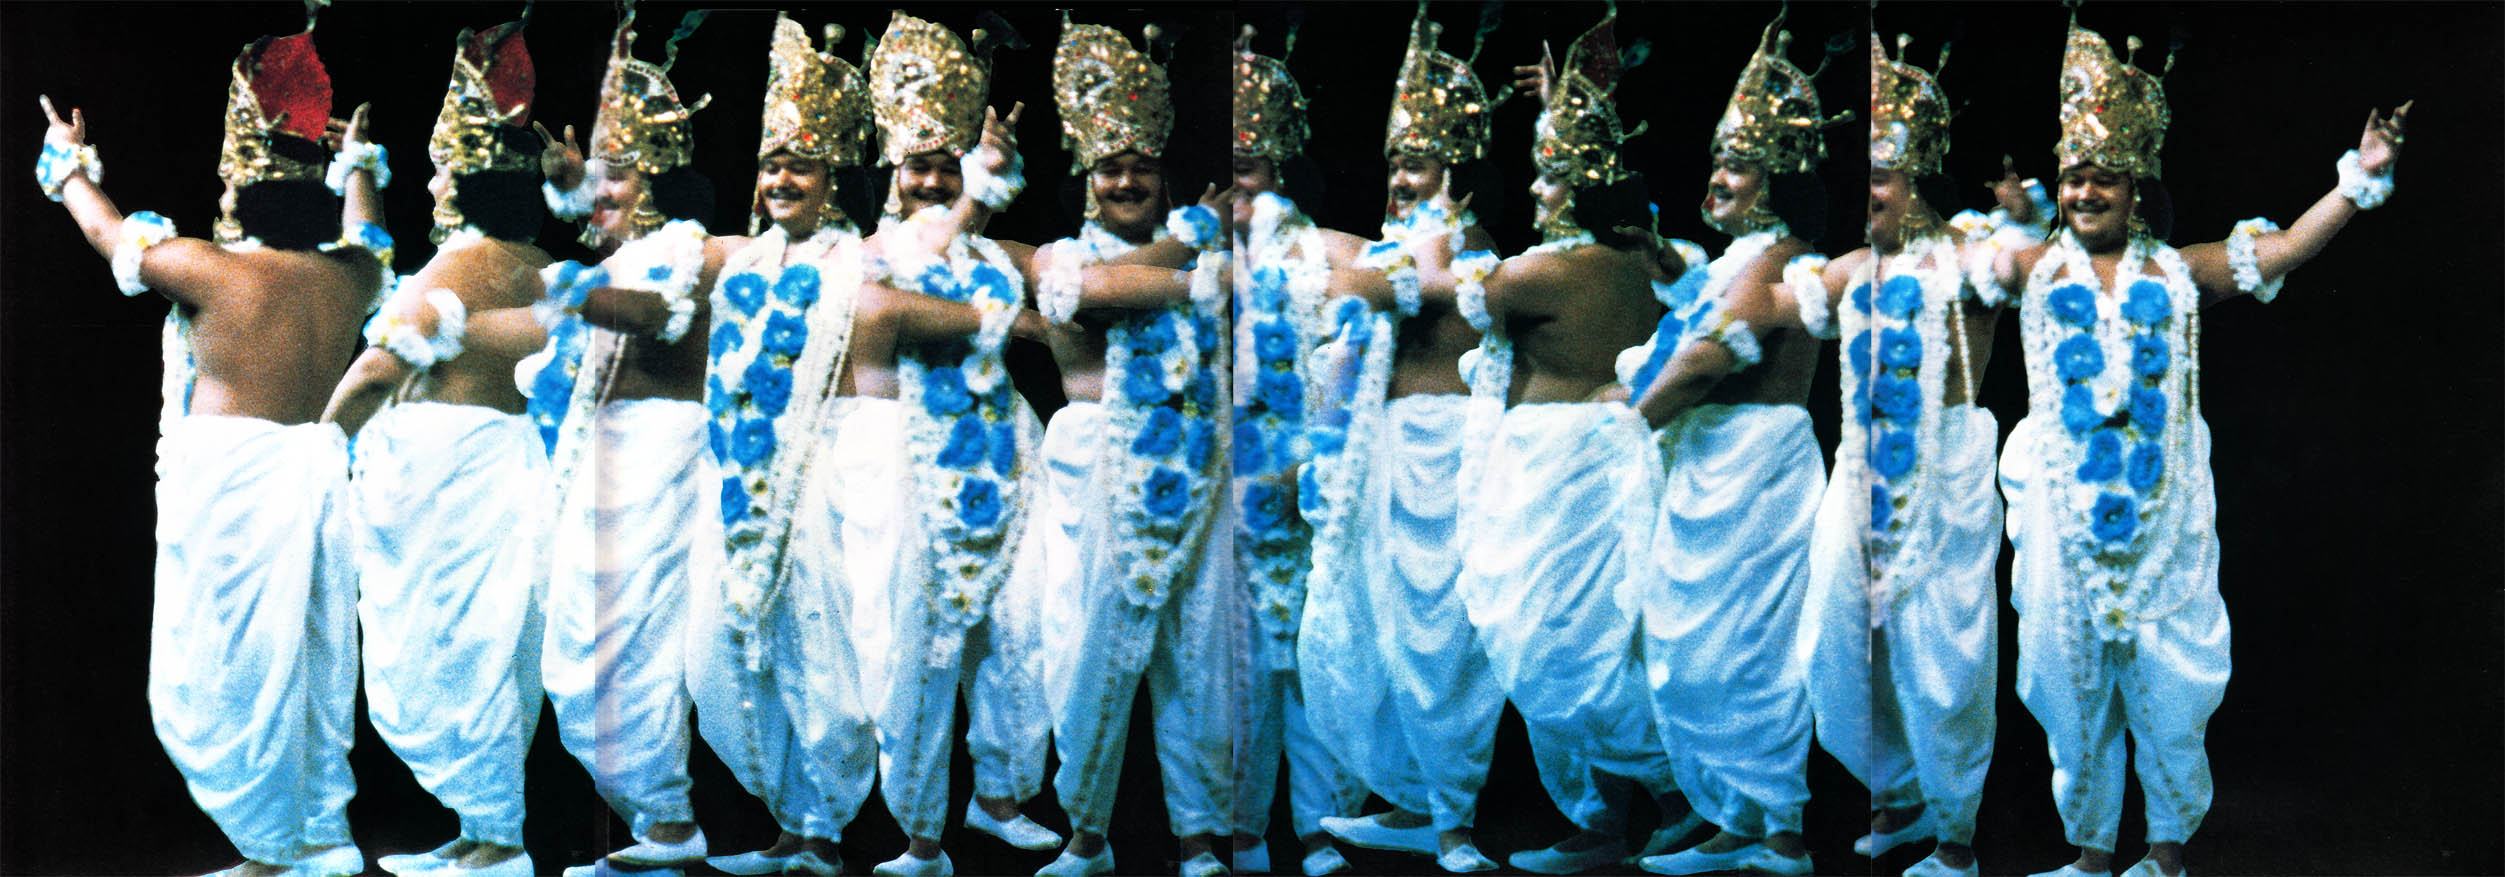 Prem Rawat (Maharaji) Dressed As Krishna Dancing On Stage Photo Montage